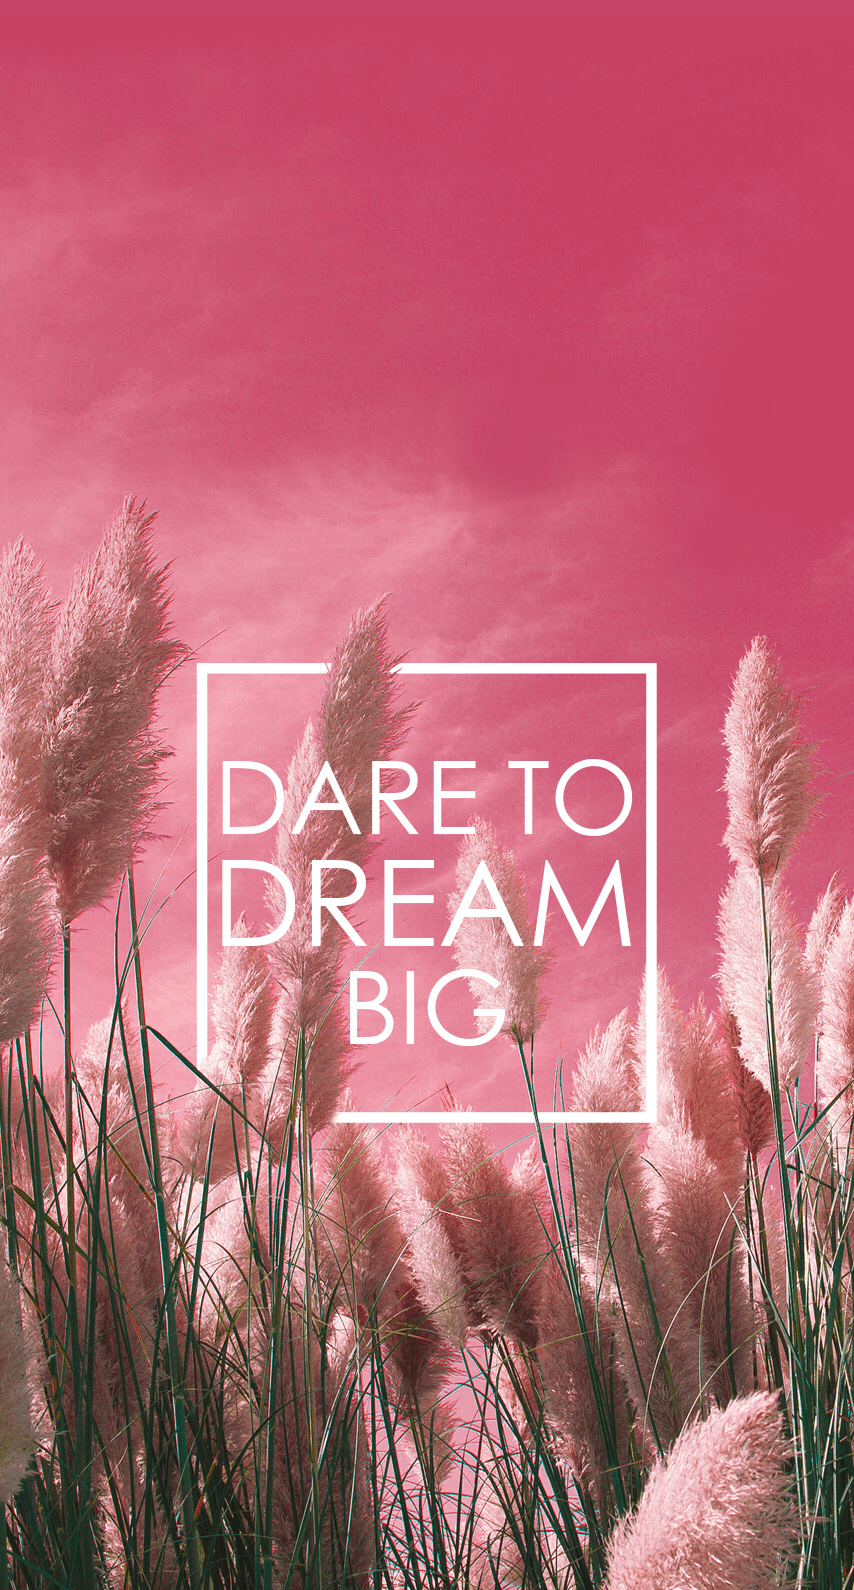 Dare to dream big #dreambig #dreams #inspiration #babyforyousa